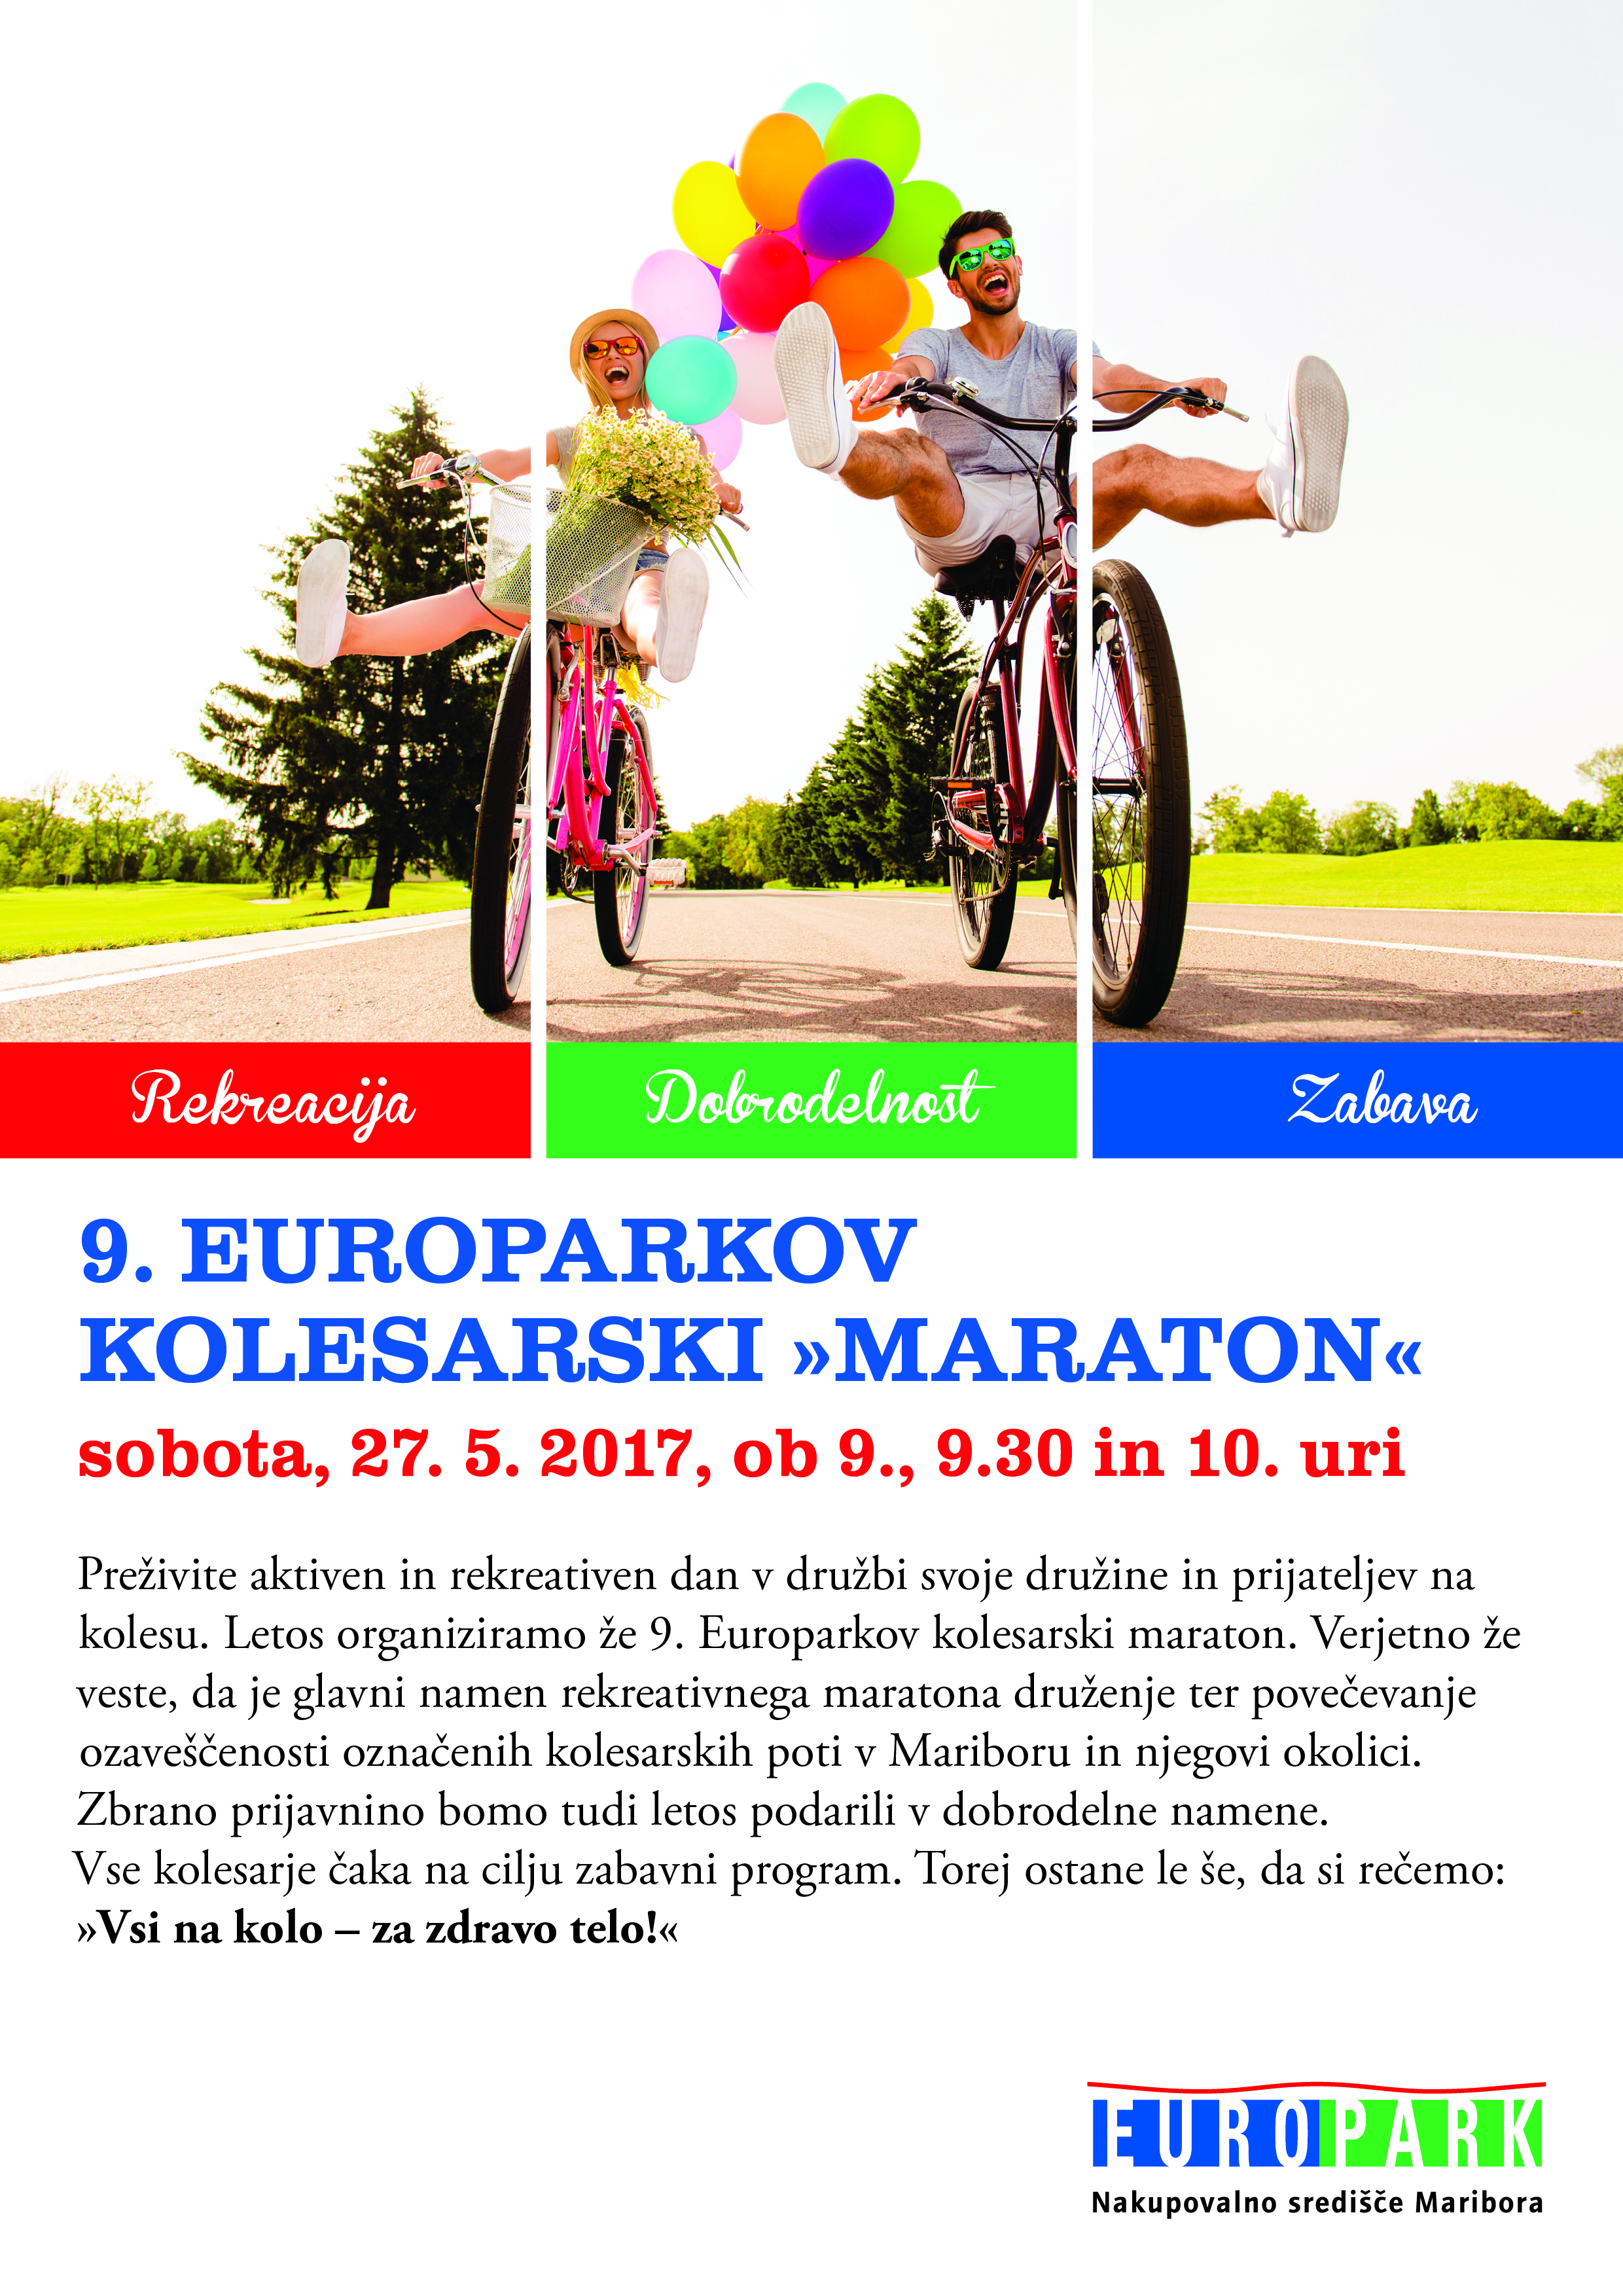 Europark_prijavnica_9_kolesarski_maraton_210x297mm_2017_04_19_1